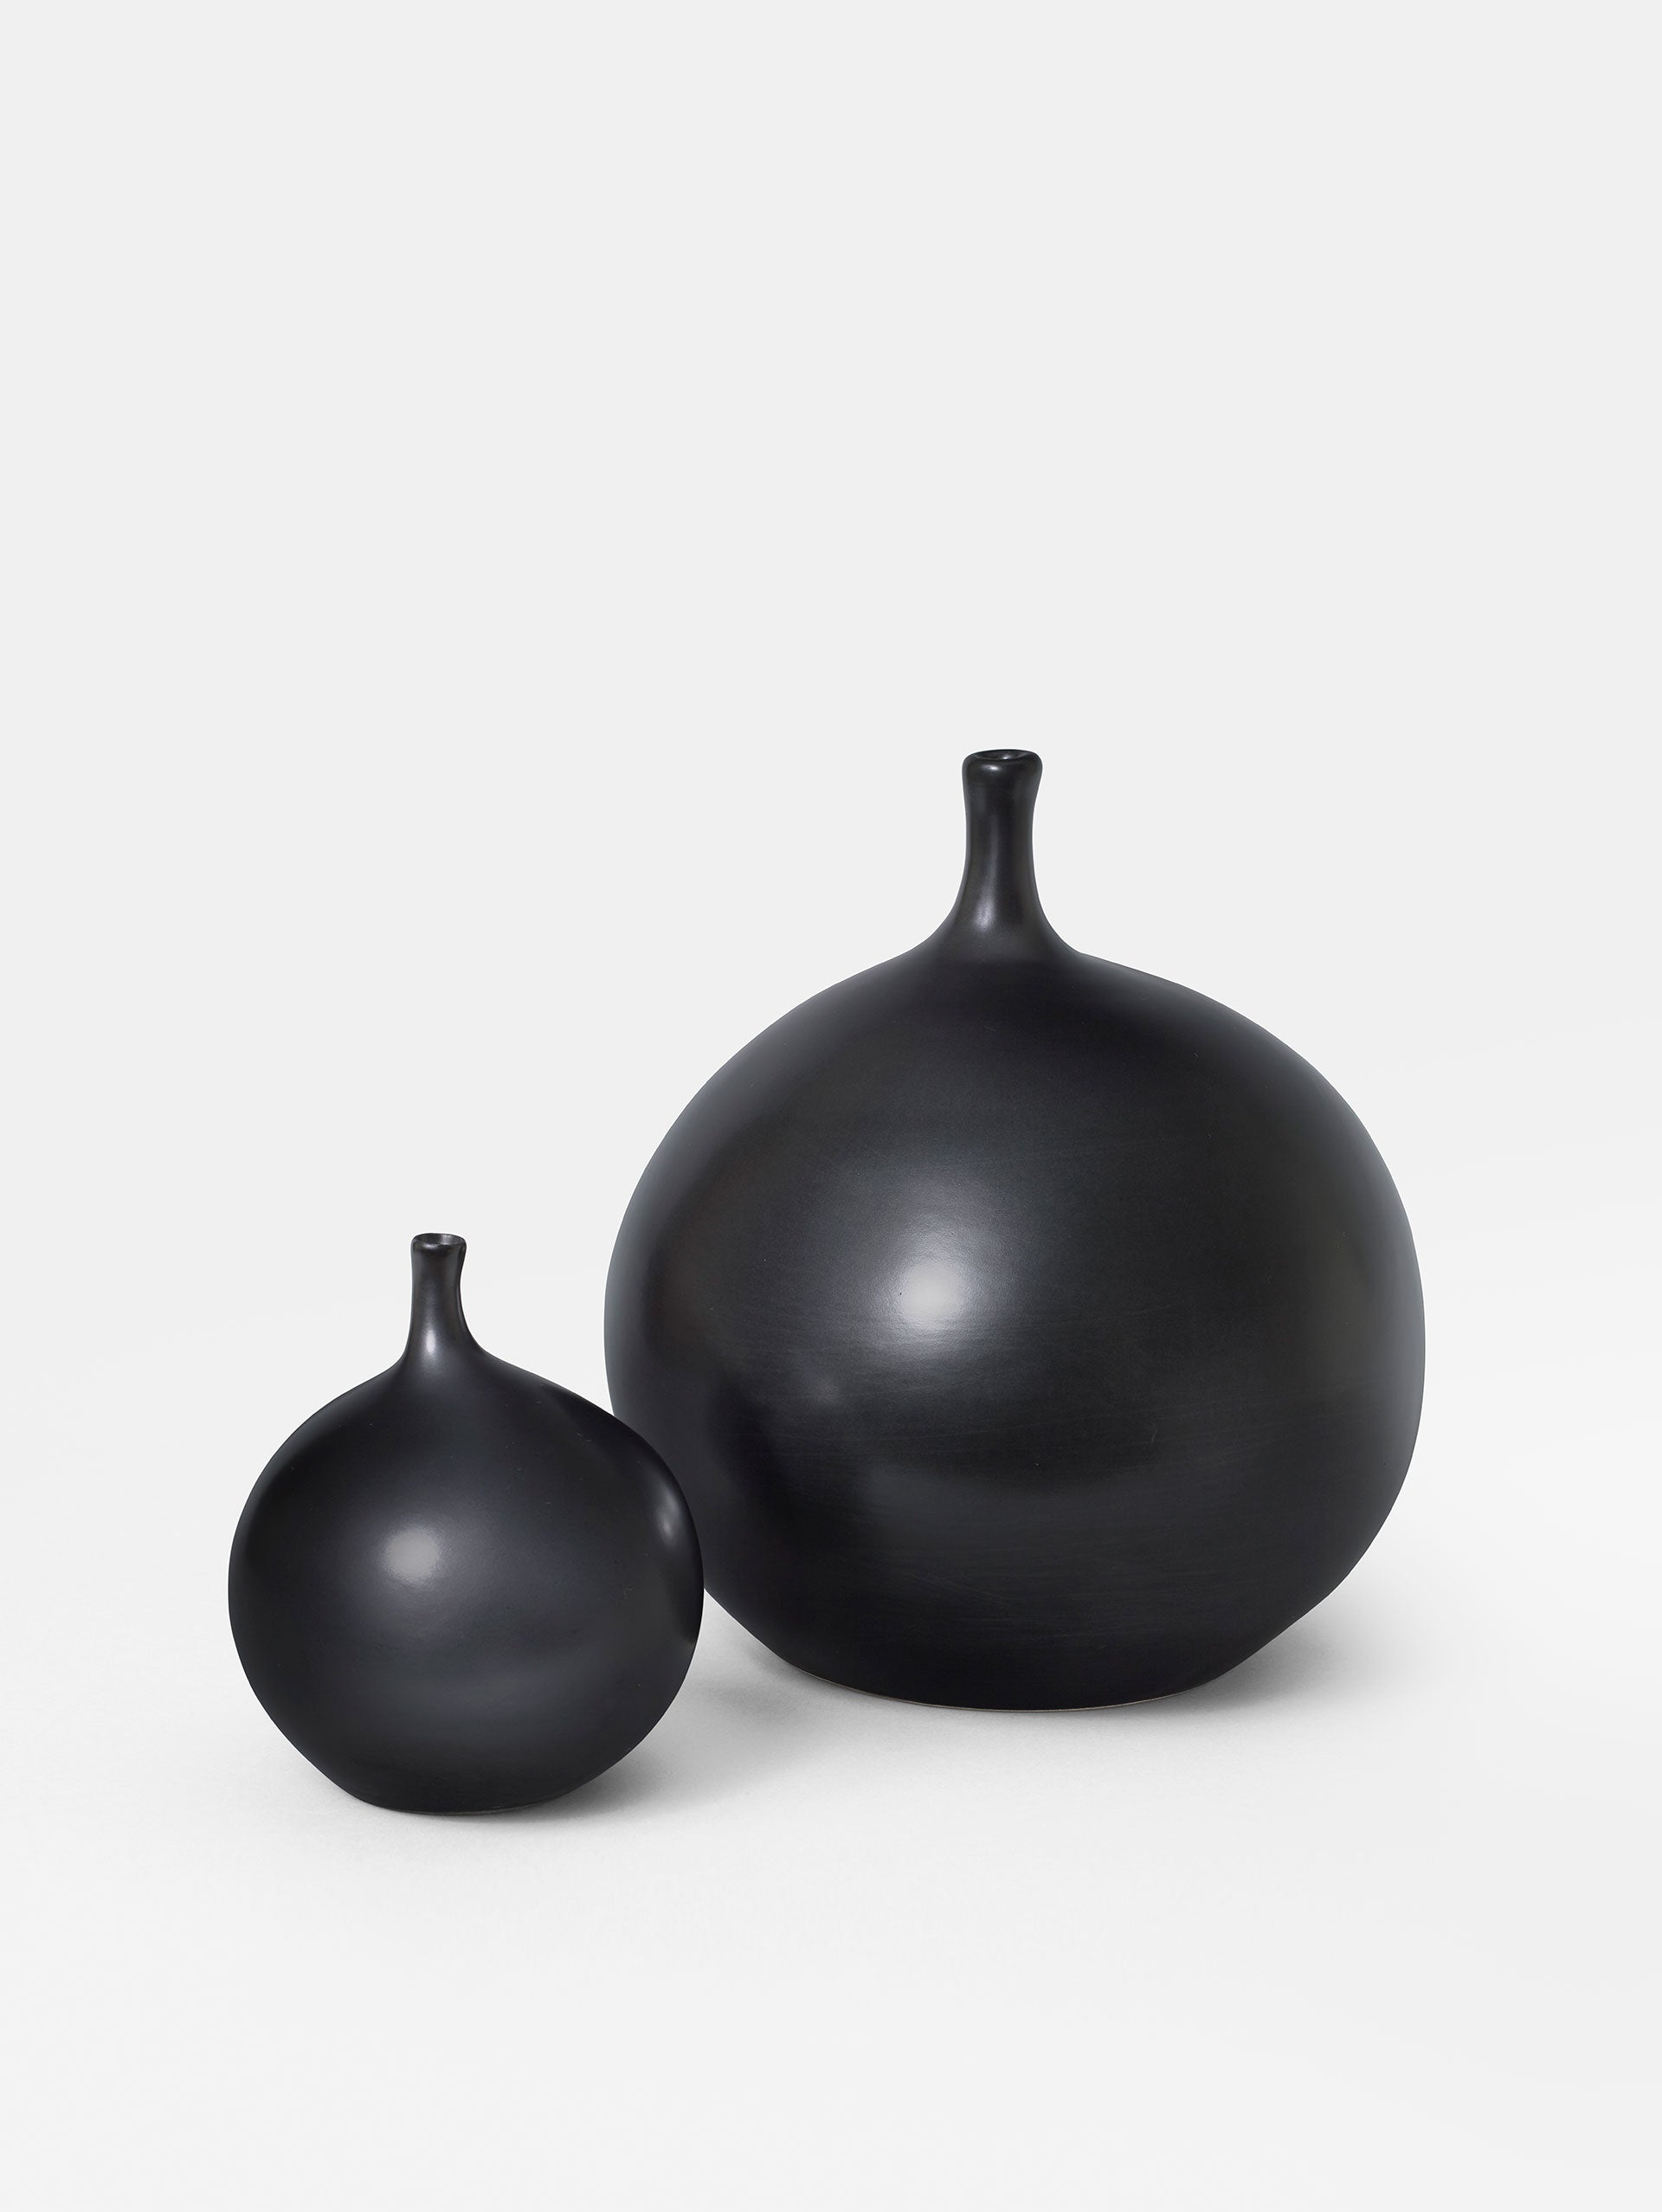 Apple Vases/ Georges Jouve, 1955/ Silver black enameled ceramic/ Courtesy of Thomas Fritsch–ARTRIUM, photo by Hervé Lewandowski